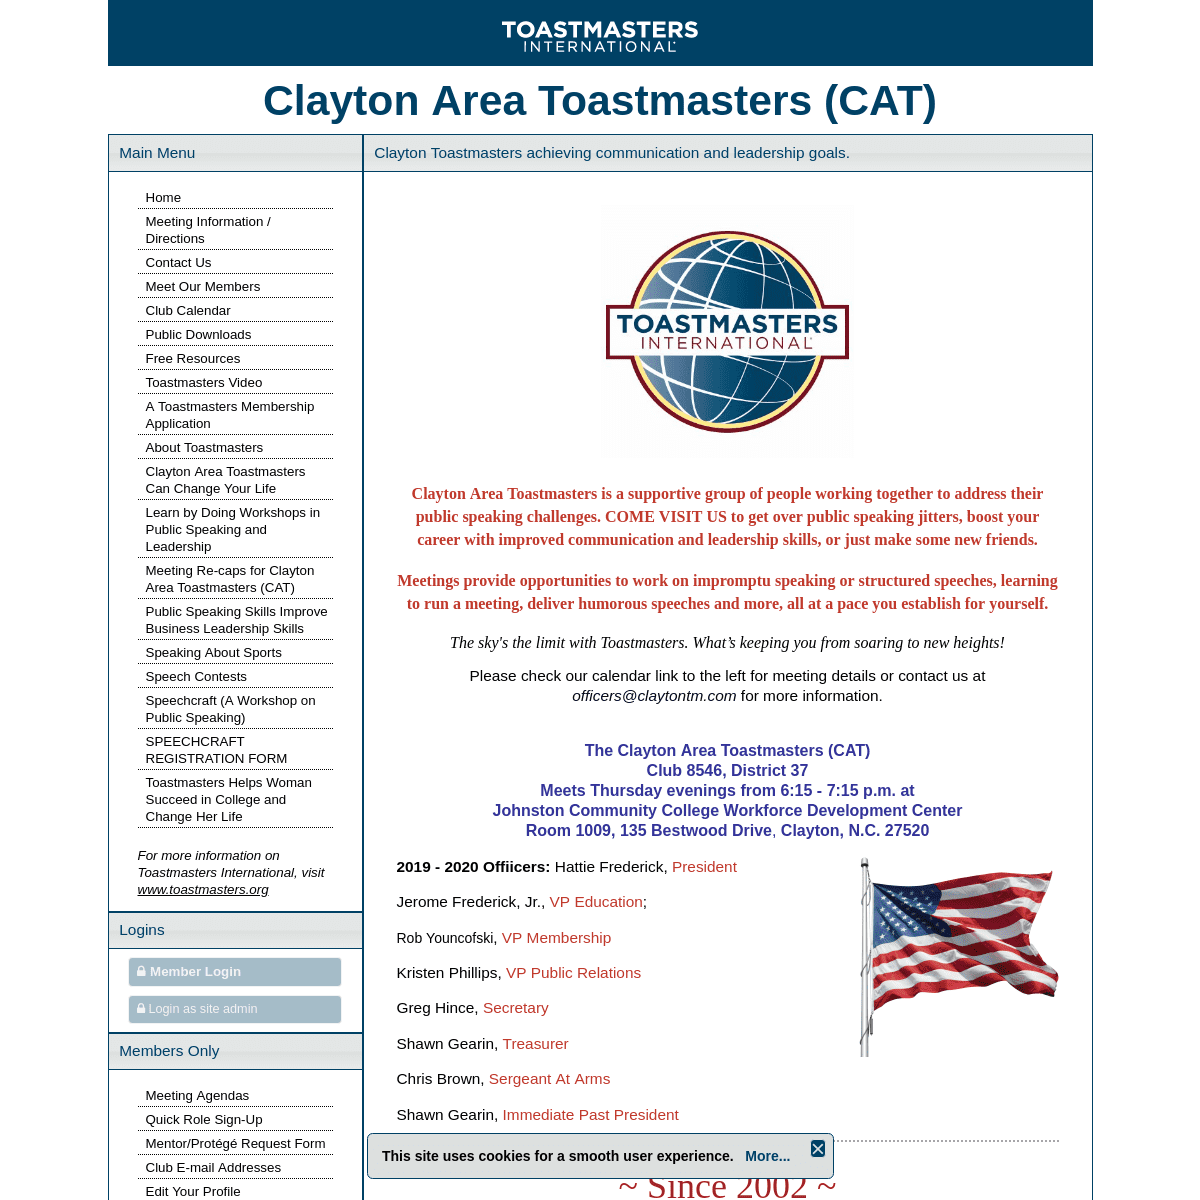 A complete backup of claytontm.com